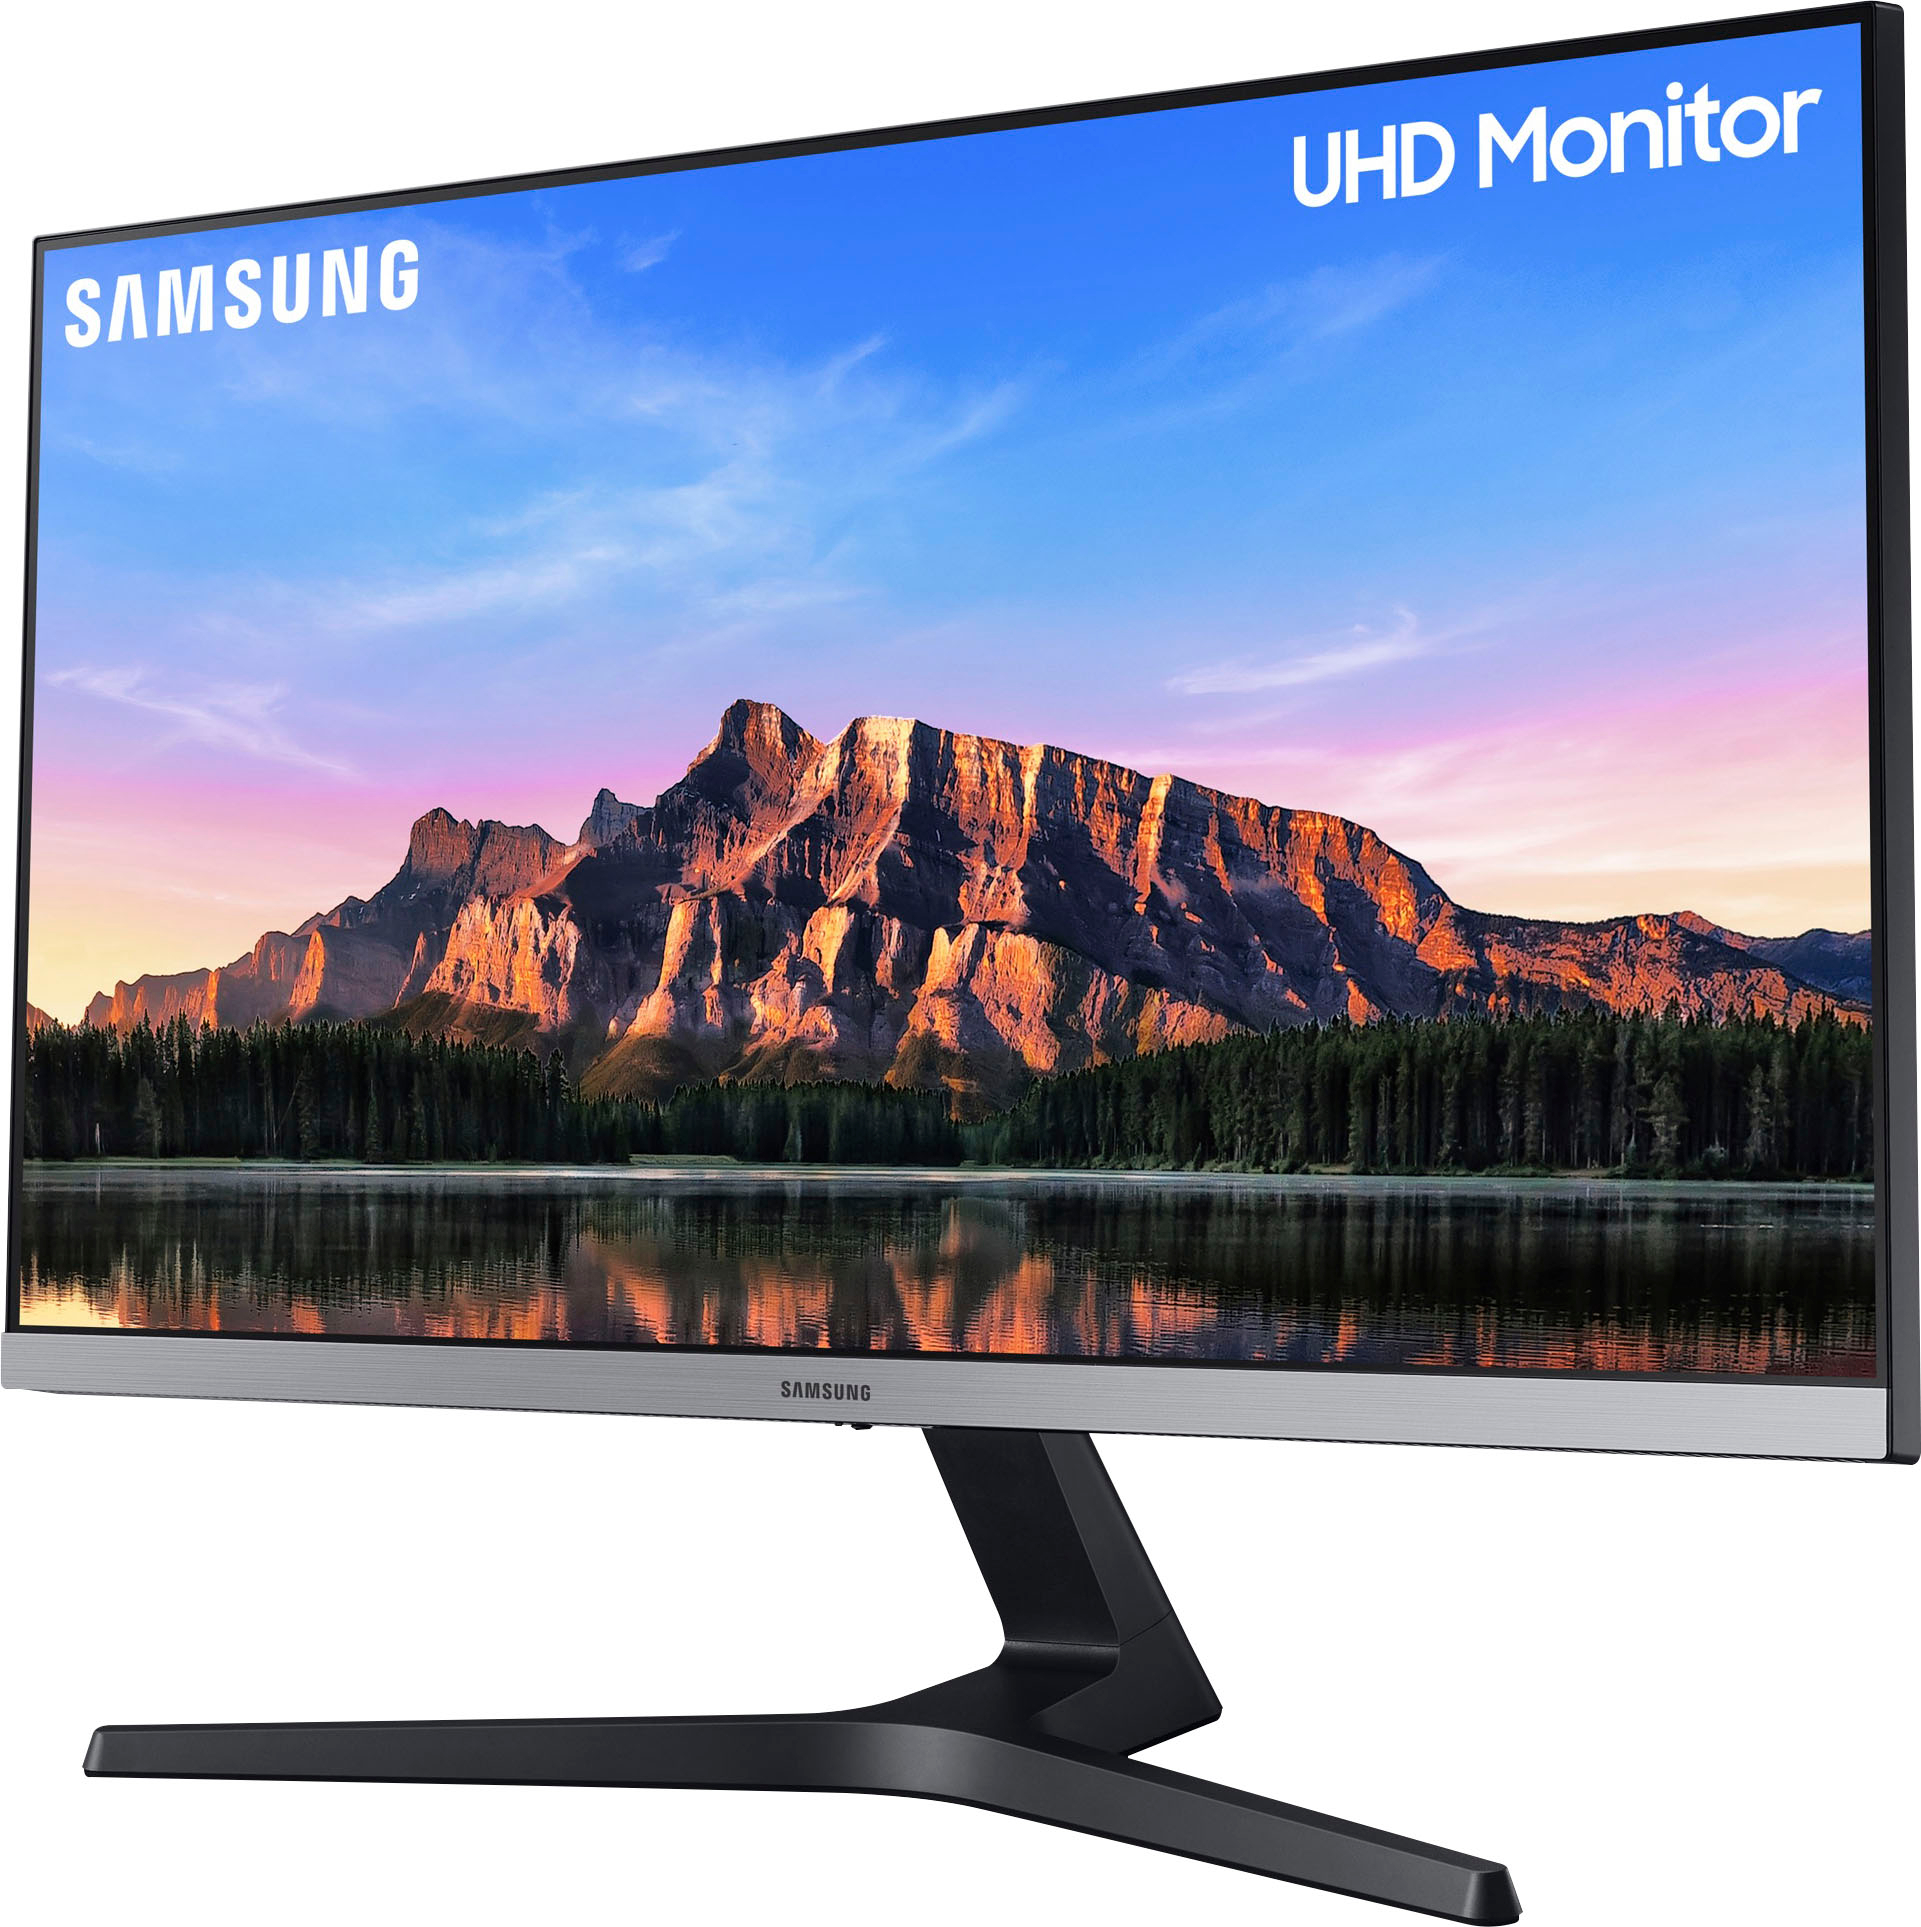 Samsung 28 4k Uhd Ips Amd Freesync Hdr Monitor Black Lu28r550uqnxza Best Buy